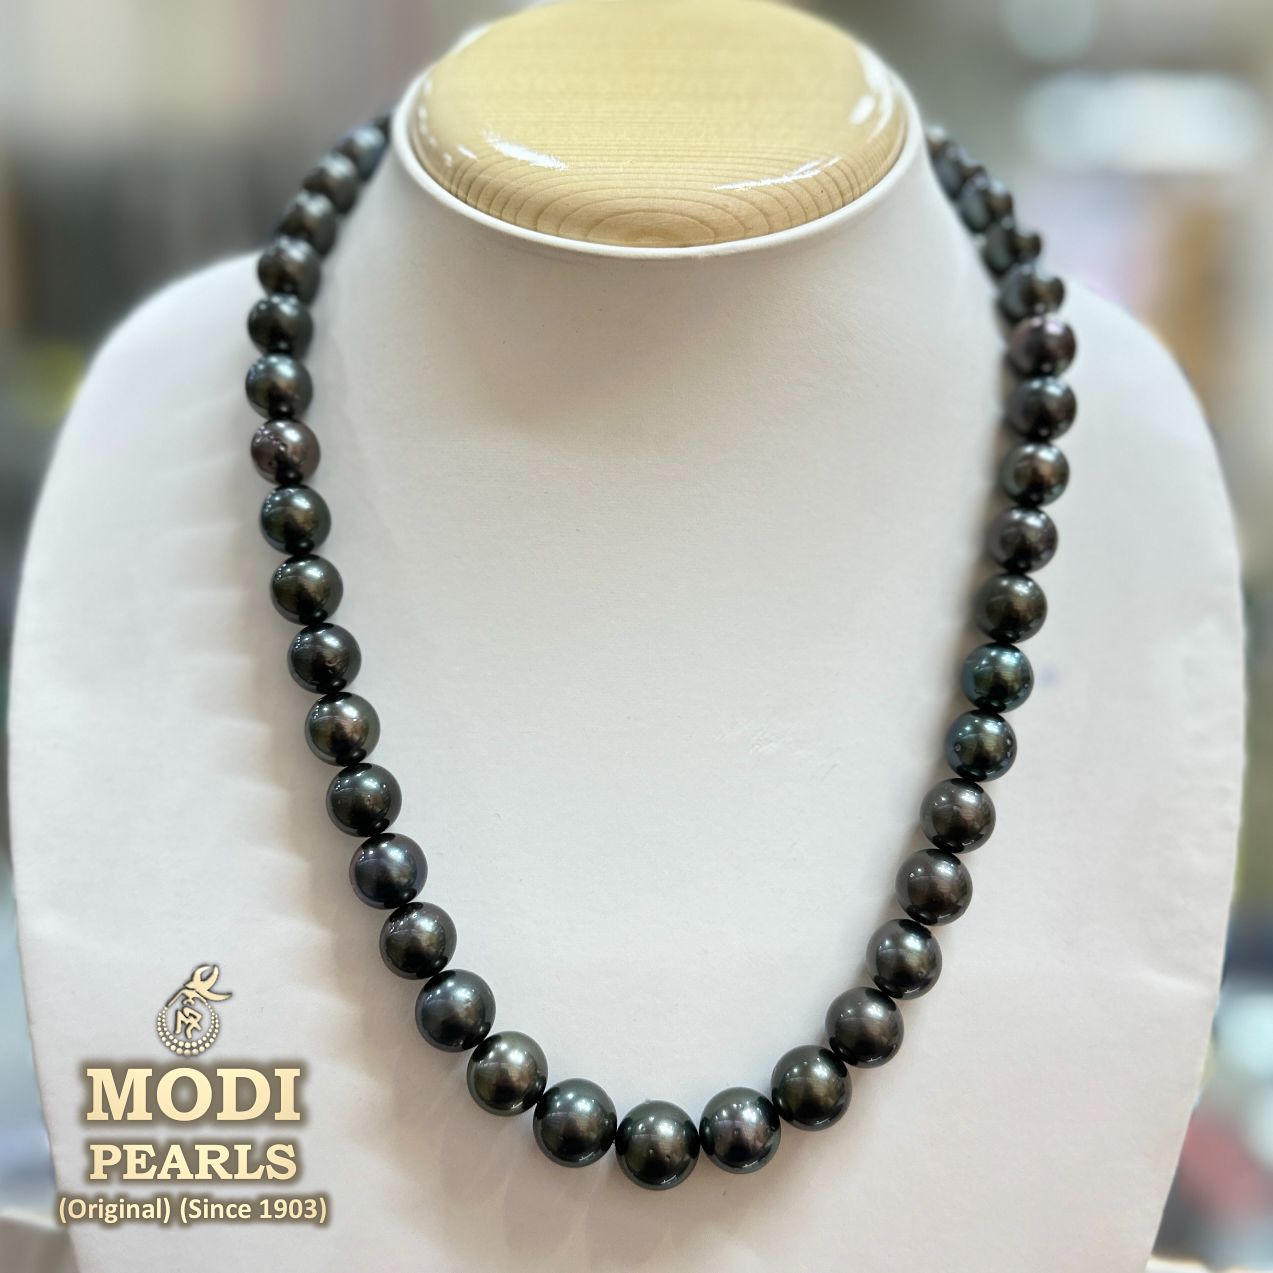 Buy Elegant Black Pearl String Necklace for Women Online